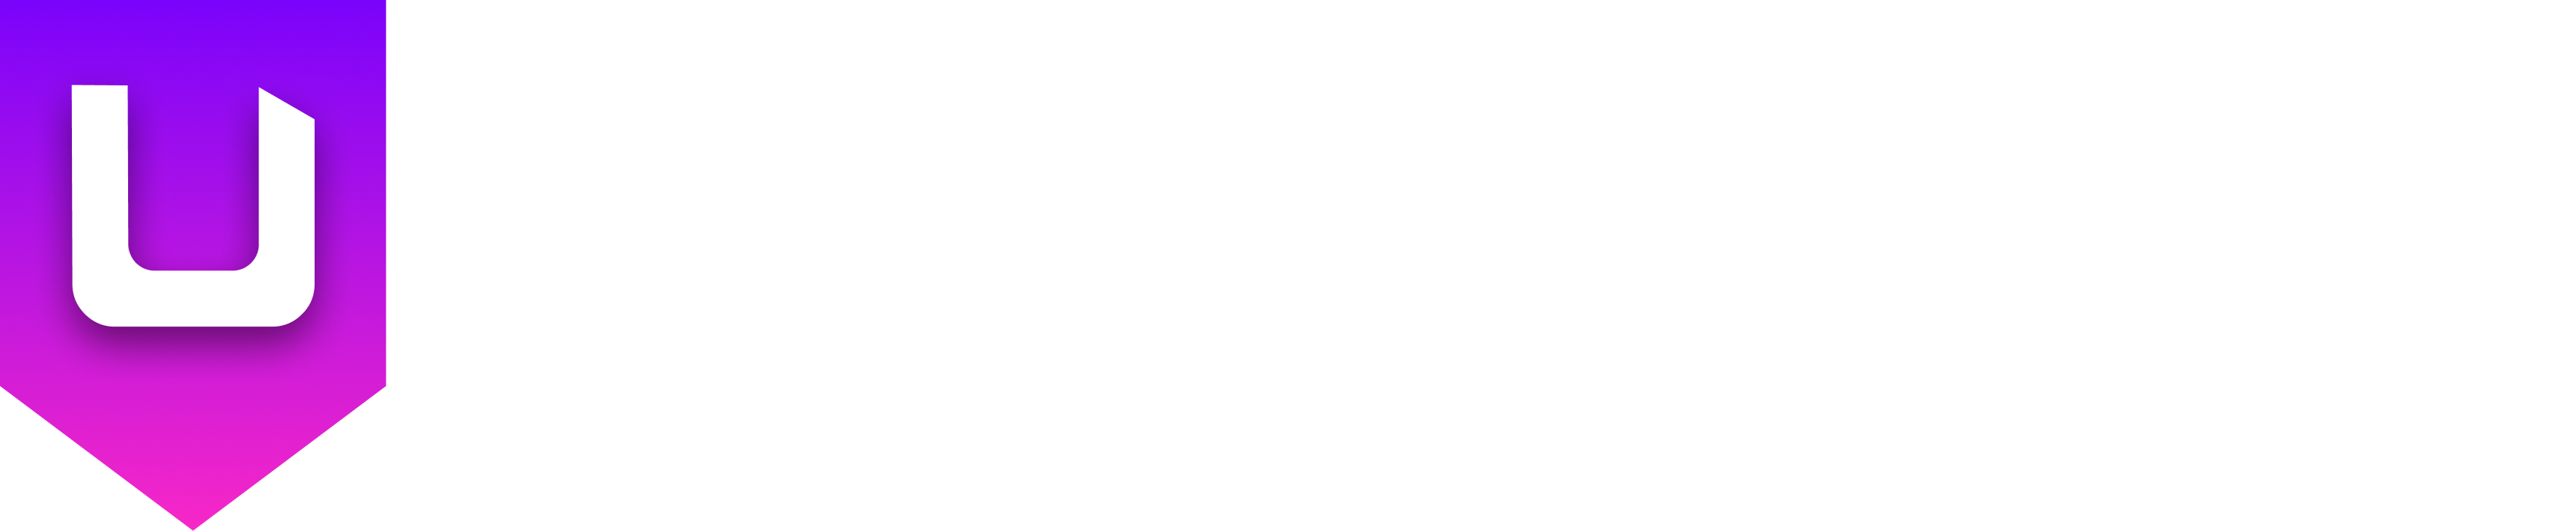 Universe Games logo